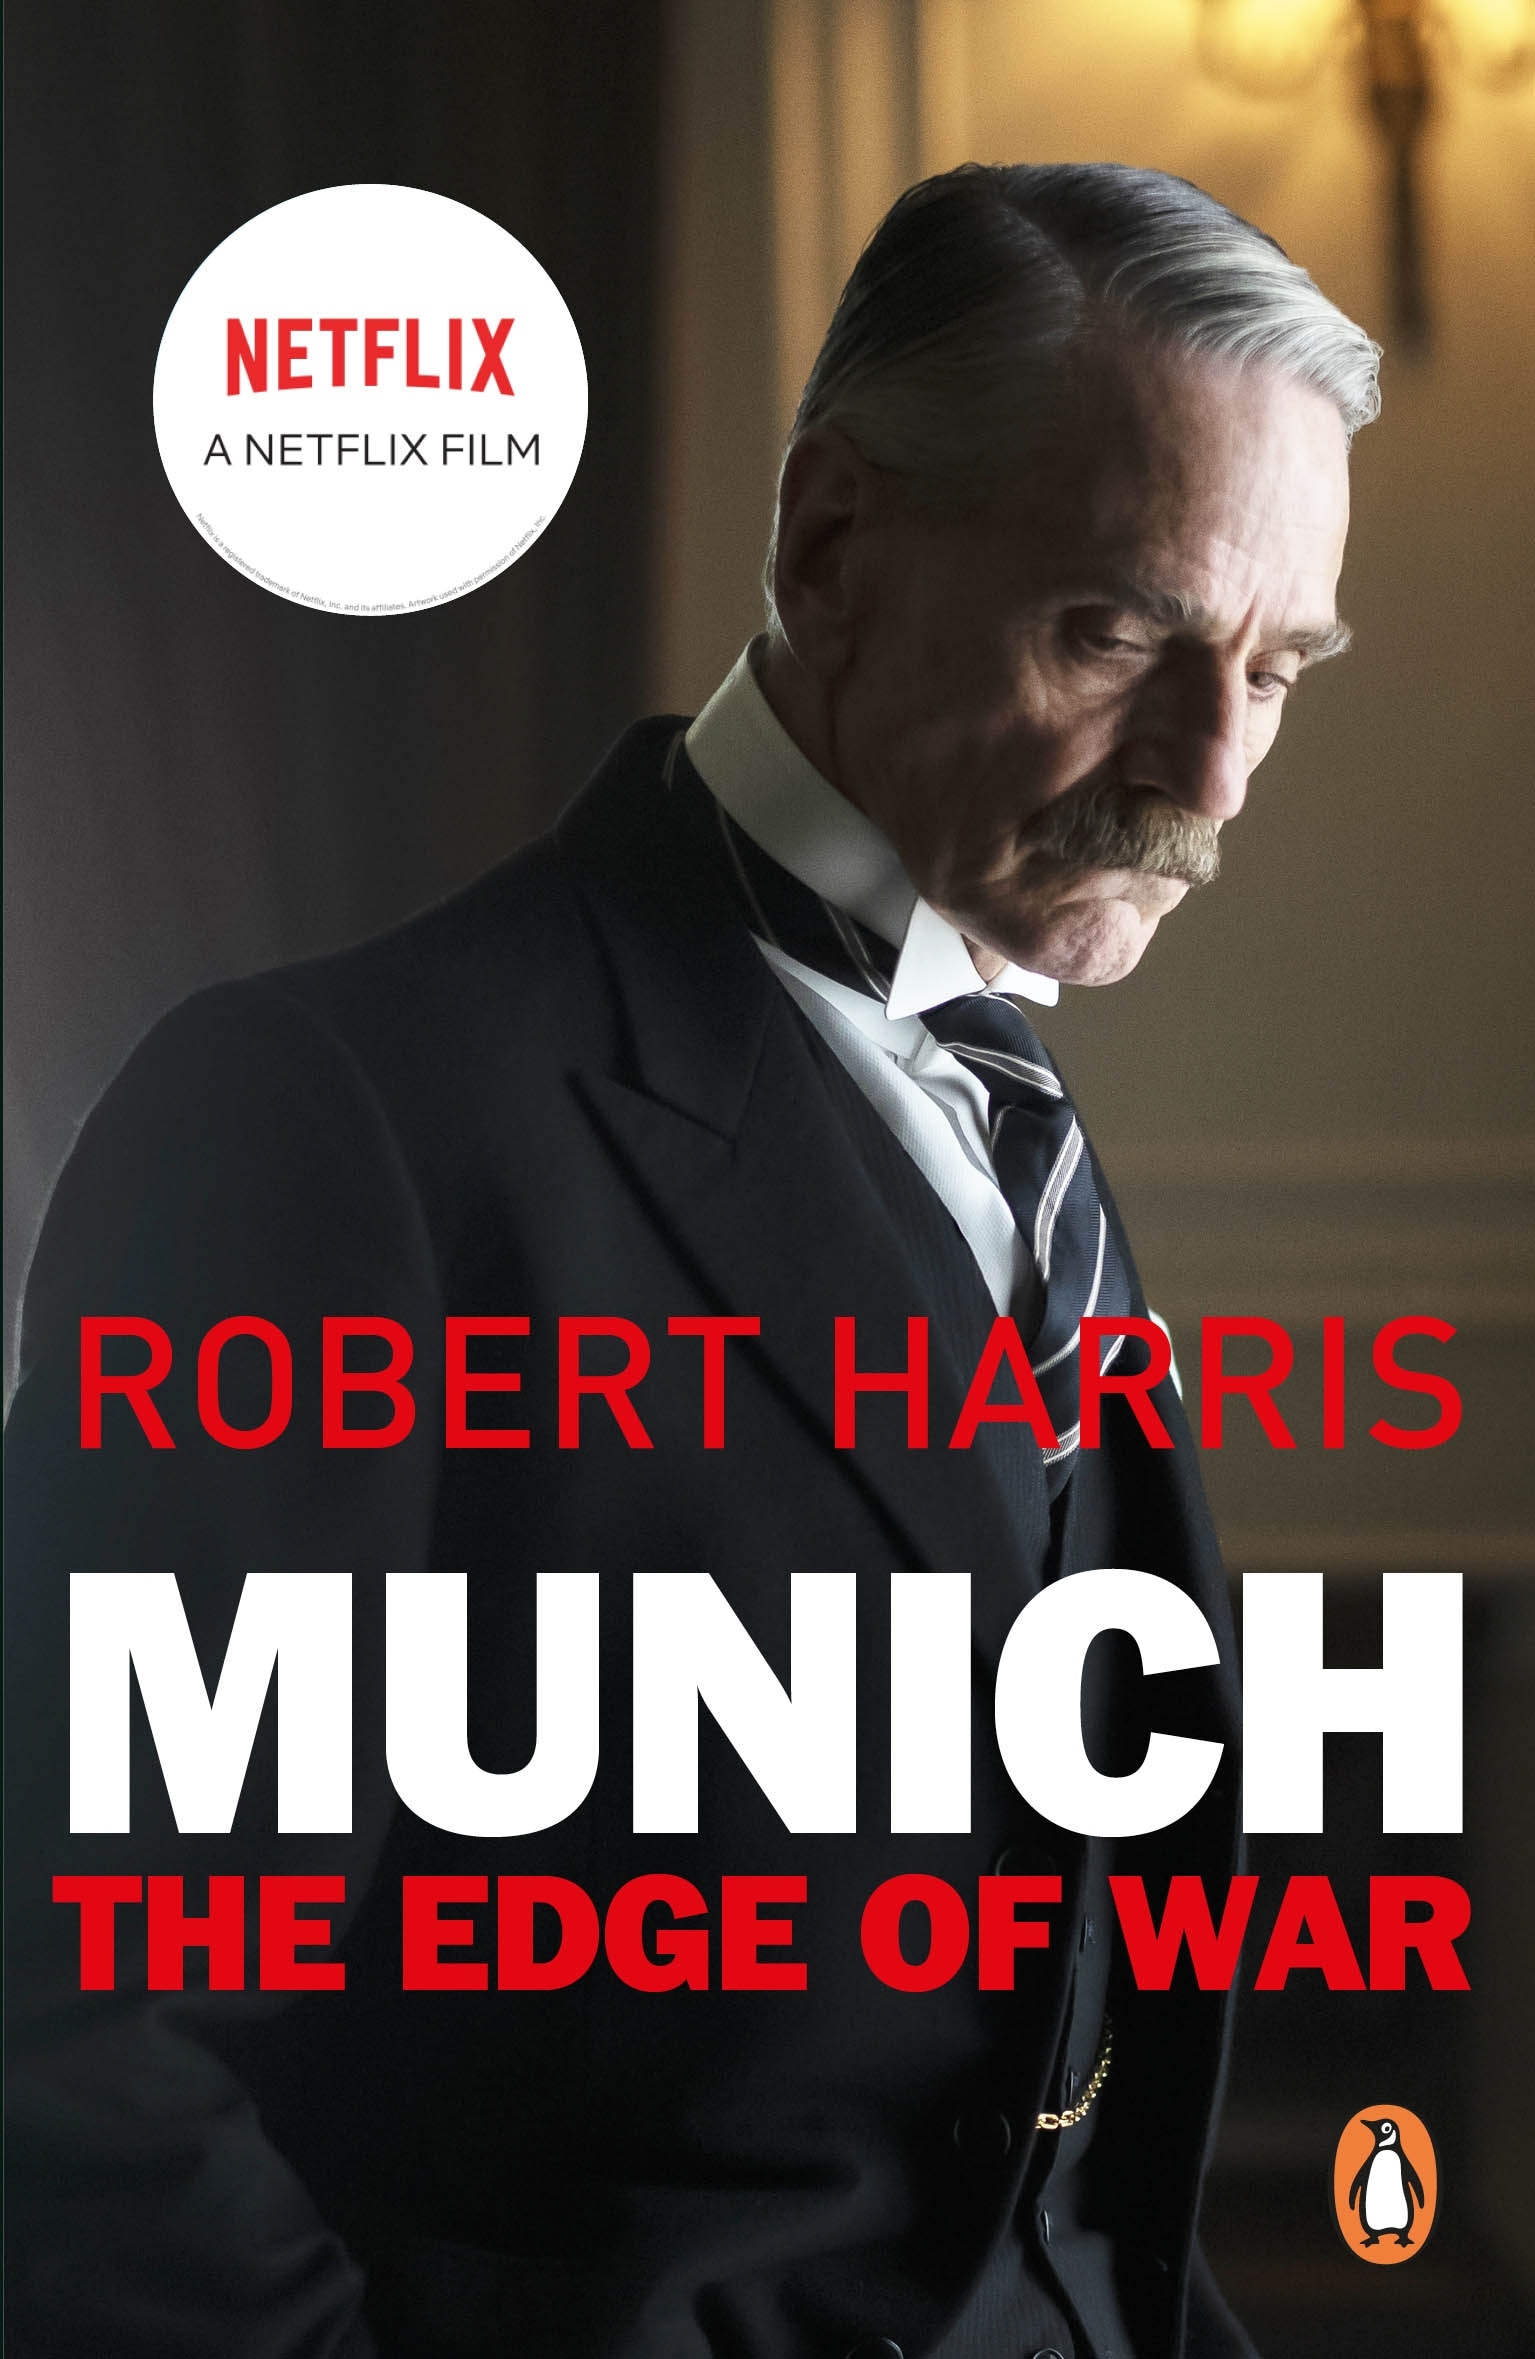 Book “Munich” by Robert Harris — January 6, 2022